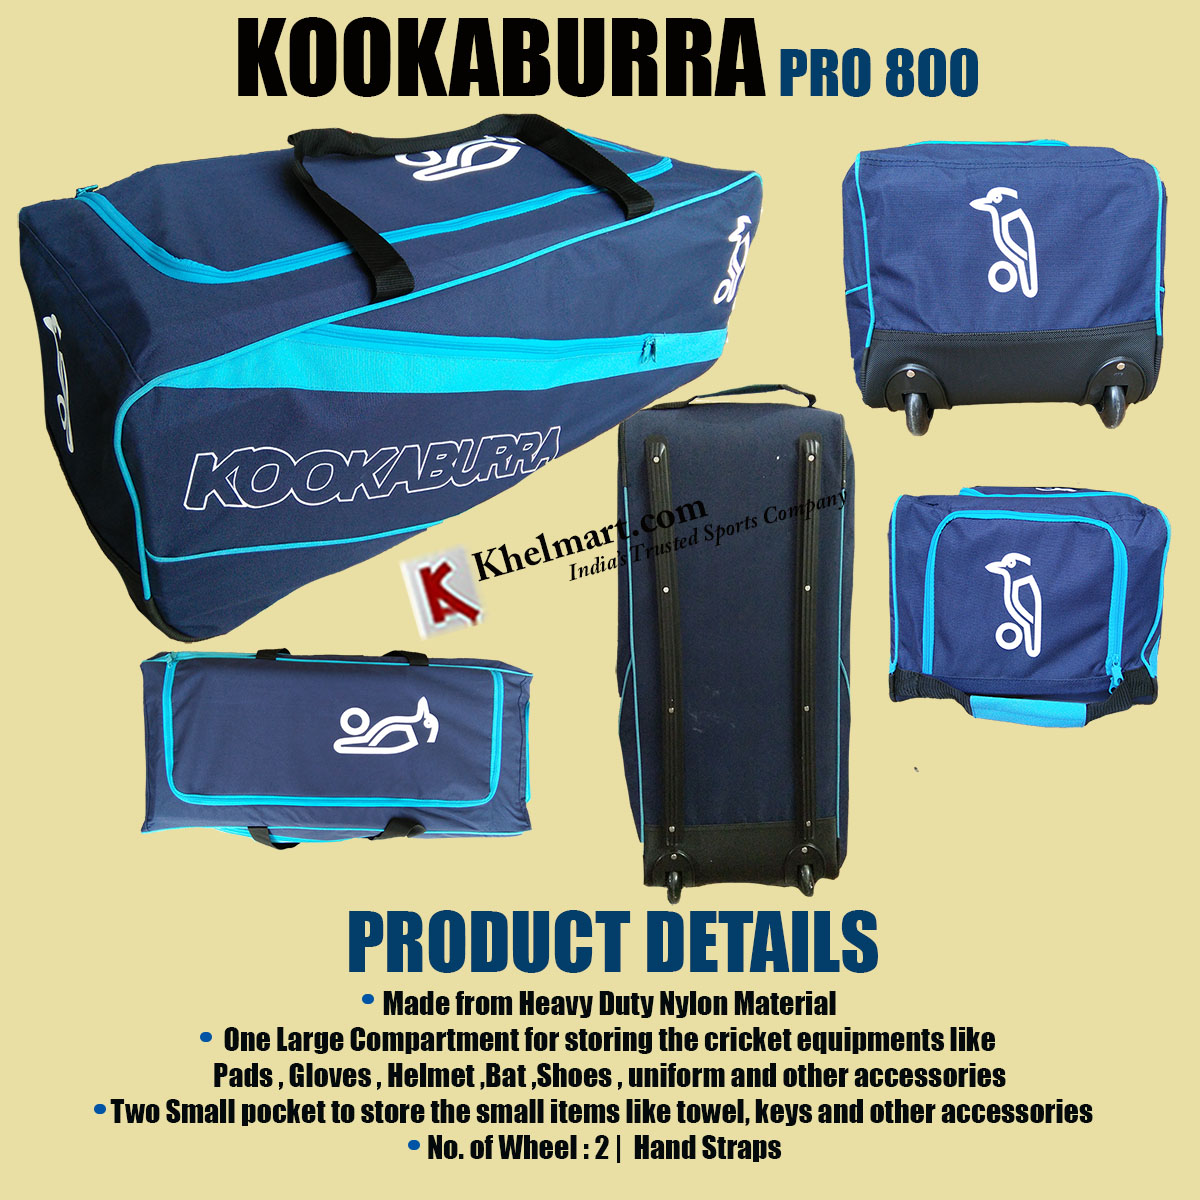 Kookaburra Pro 800 Cricket Kit bag.jpg